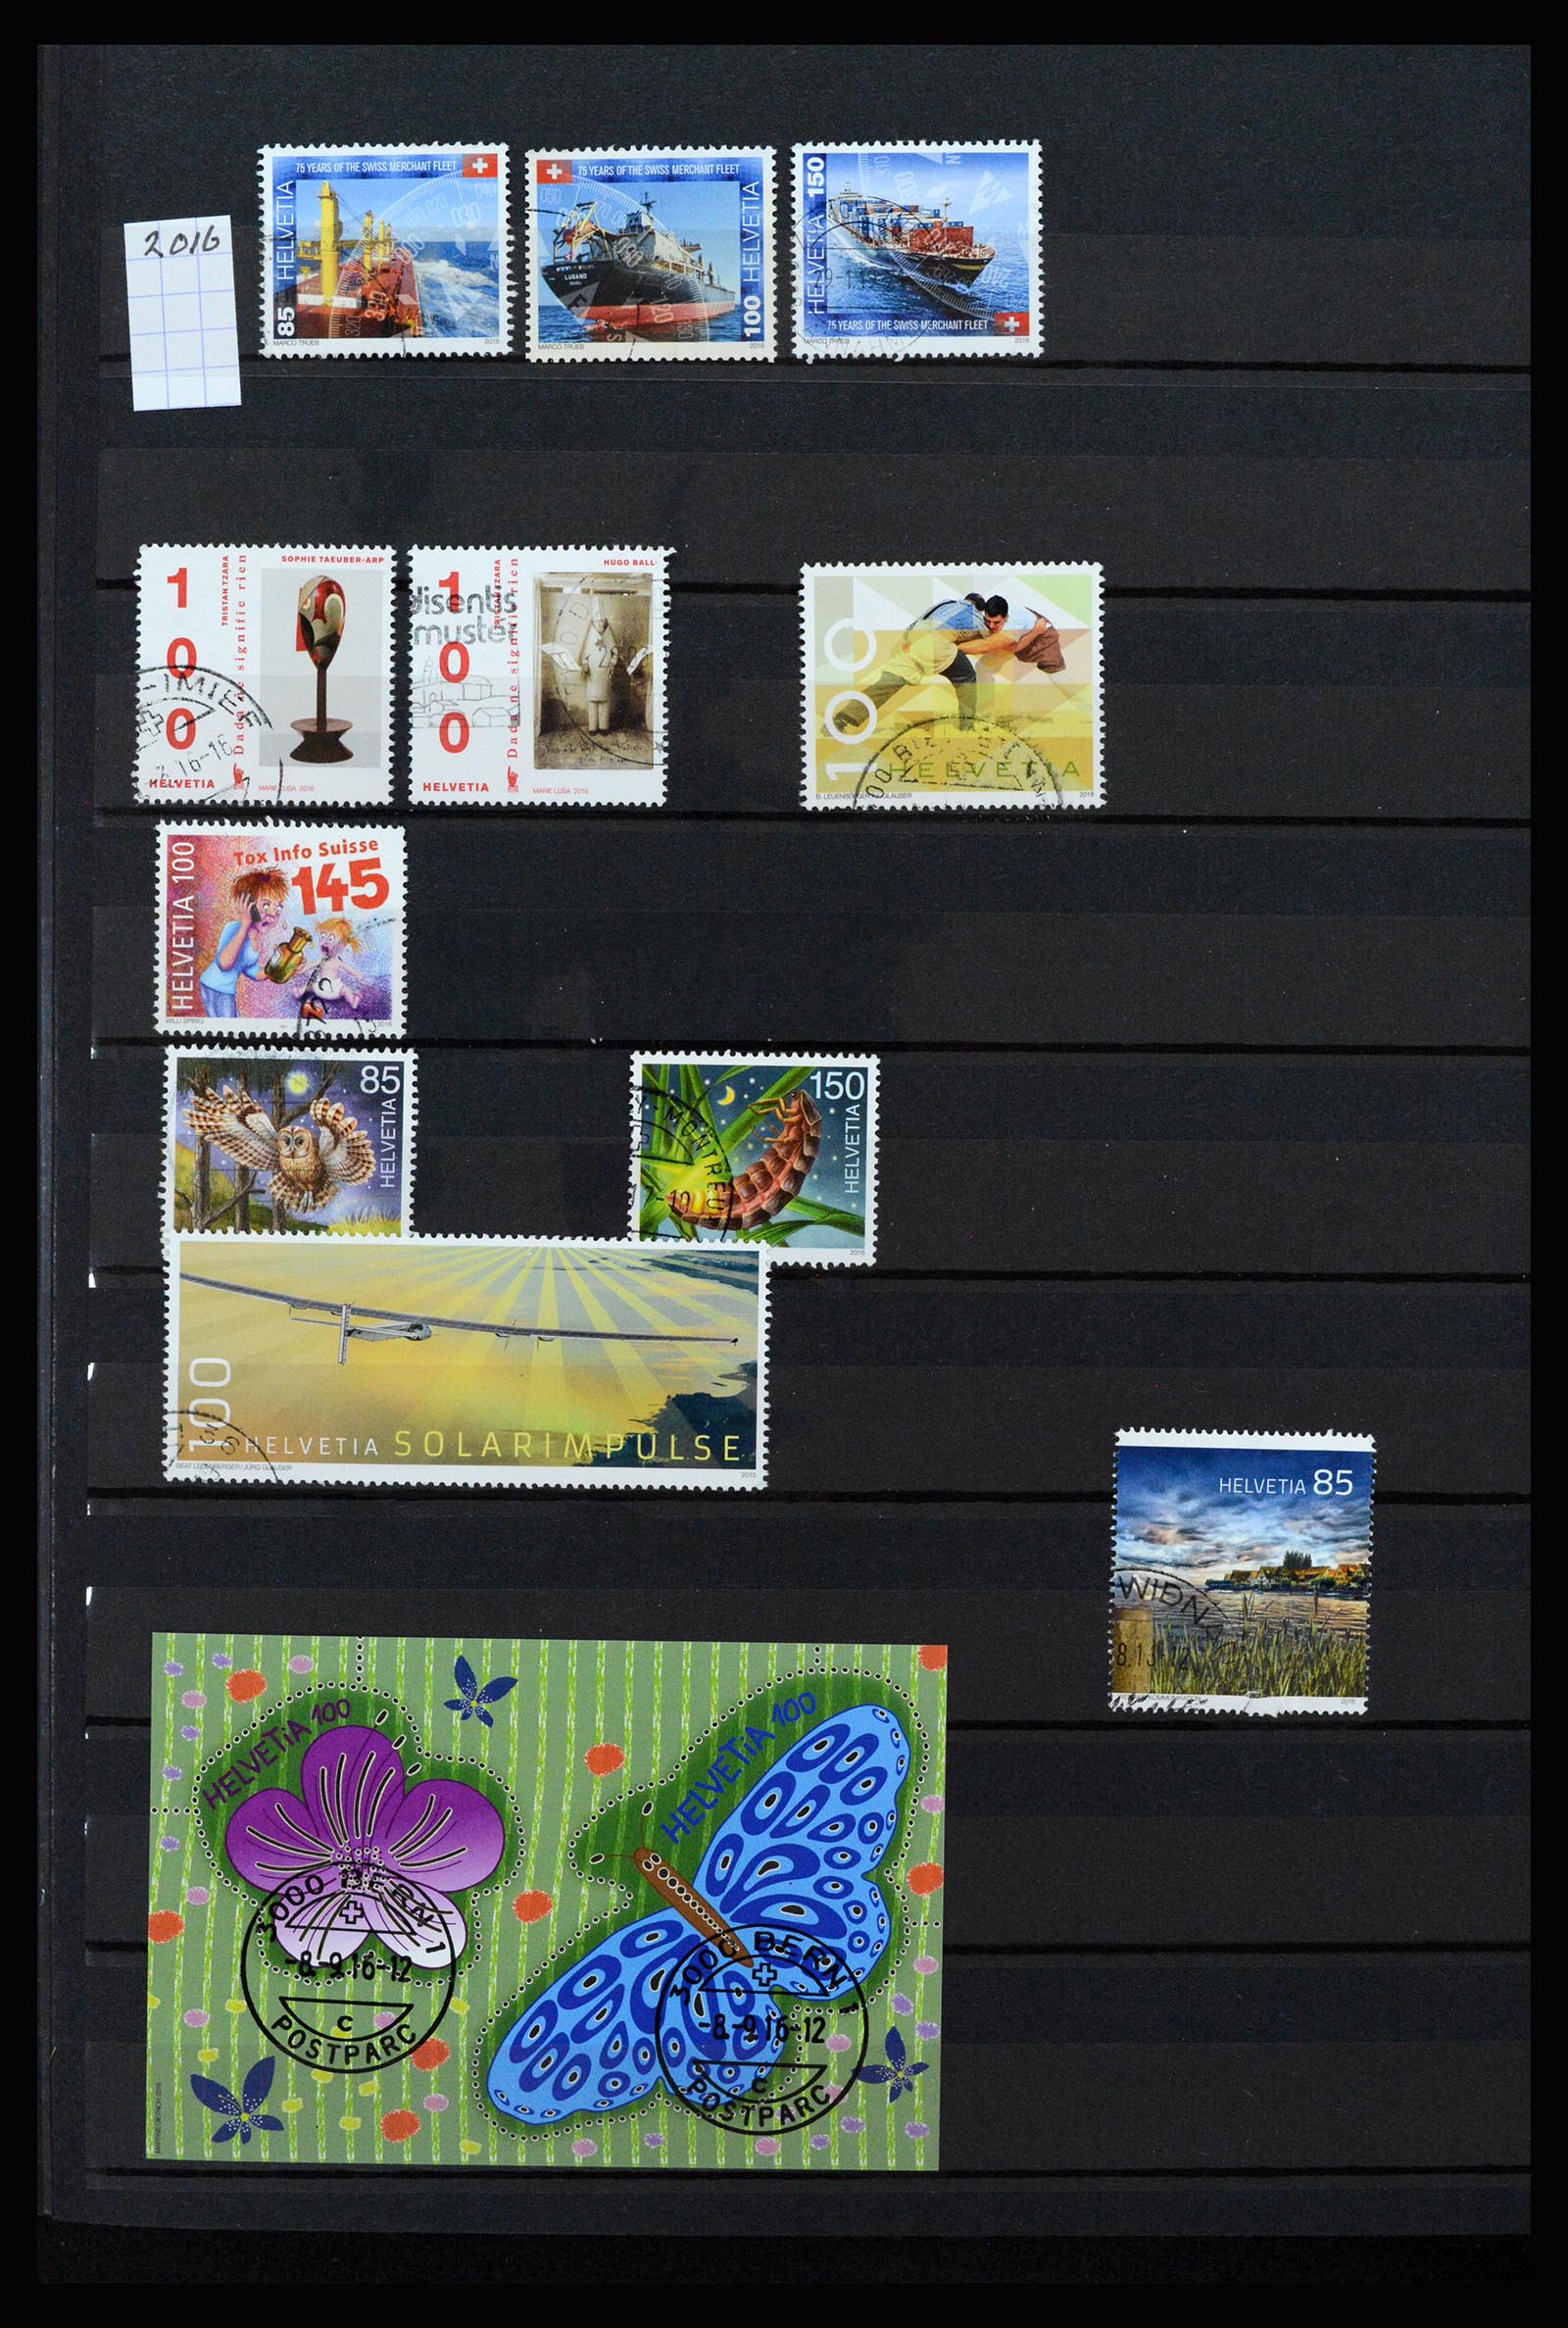 37225 188 - Stamp collection 37225 Switzerland 1854-2020.